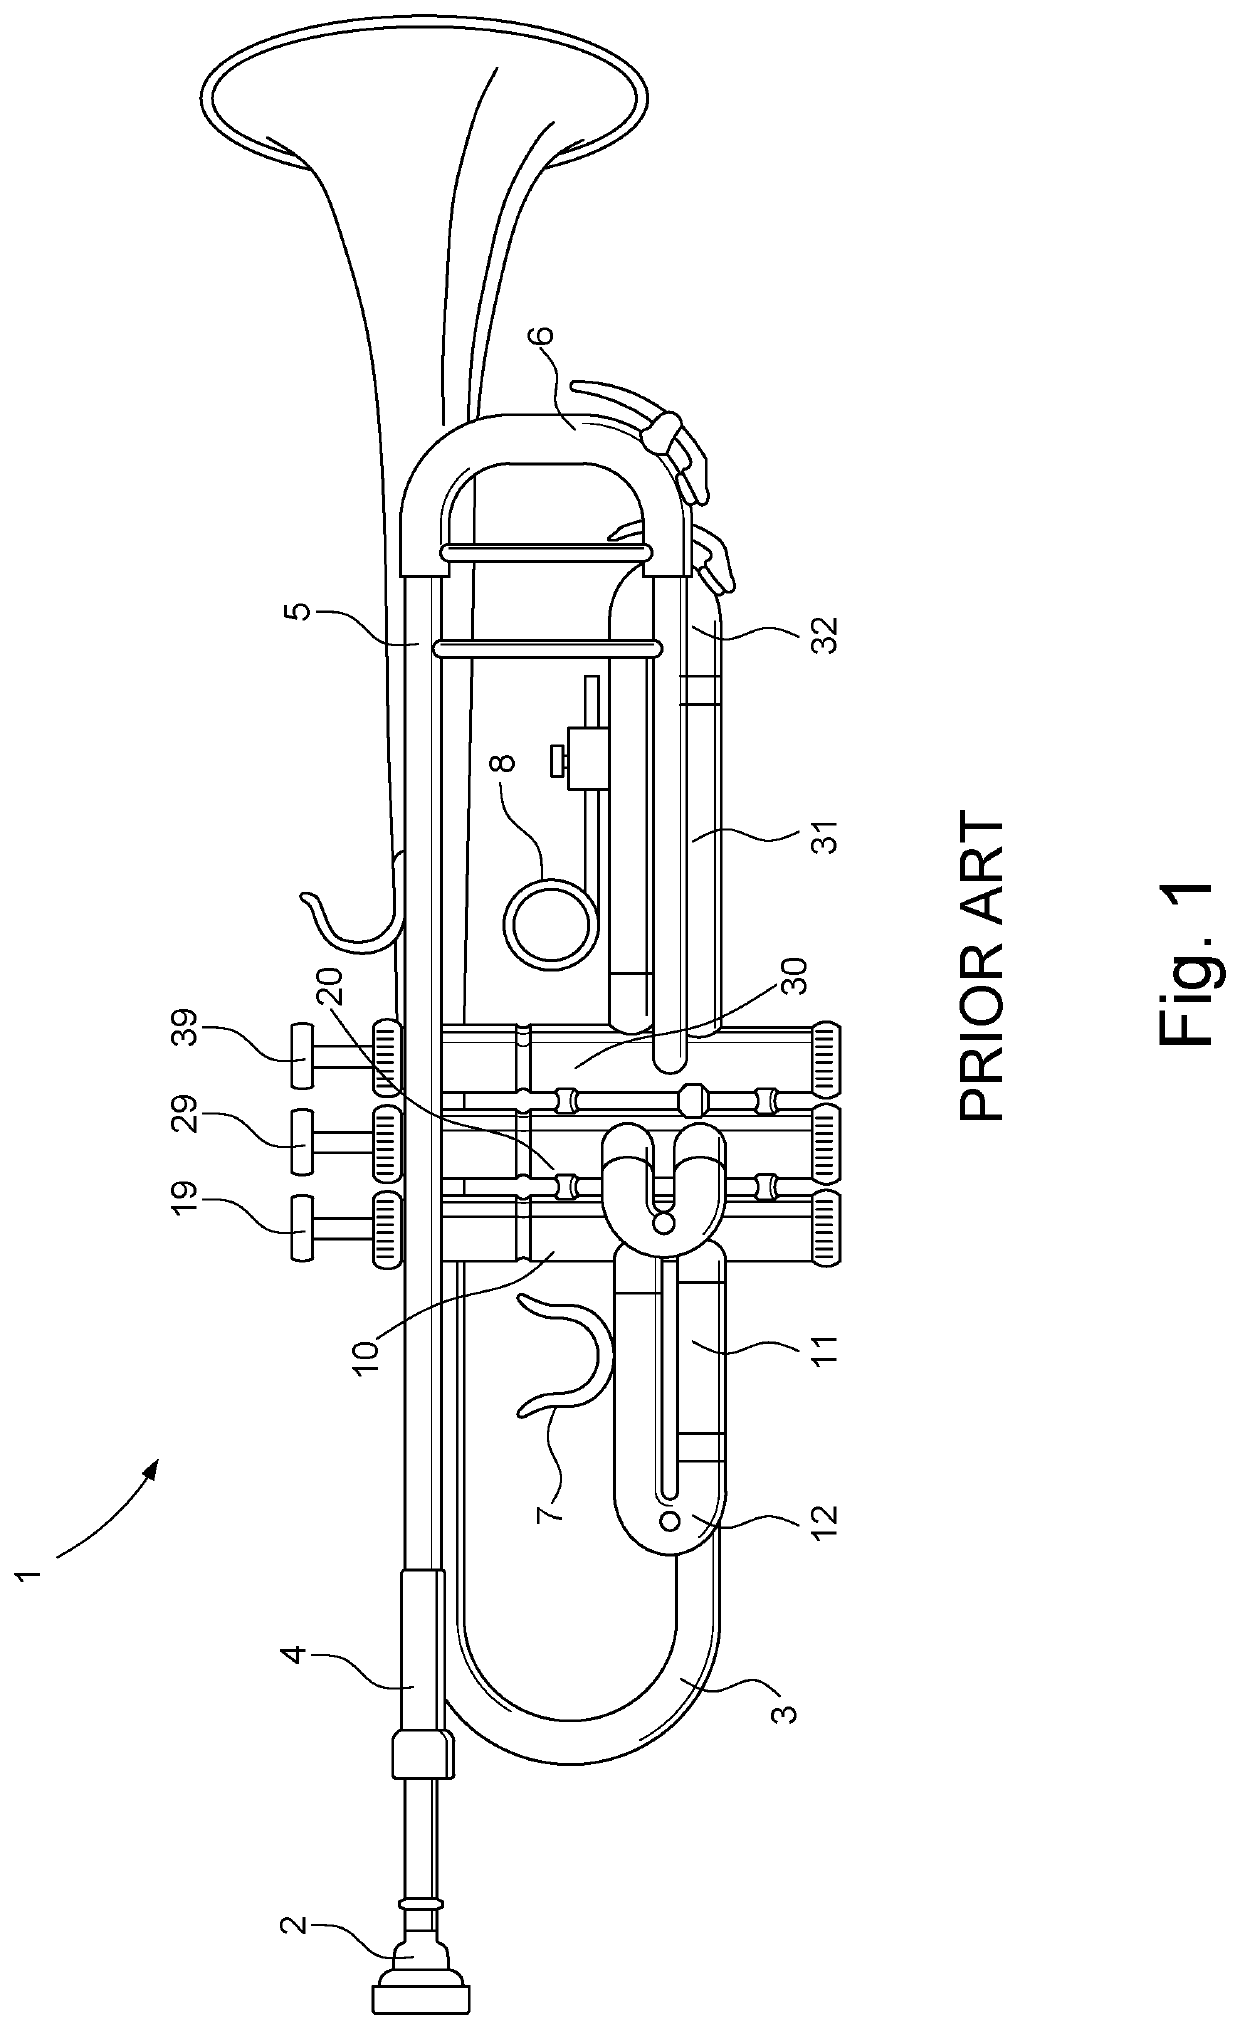 Pitch adjustment for a valve brass musical instrument